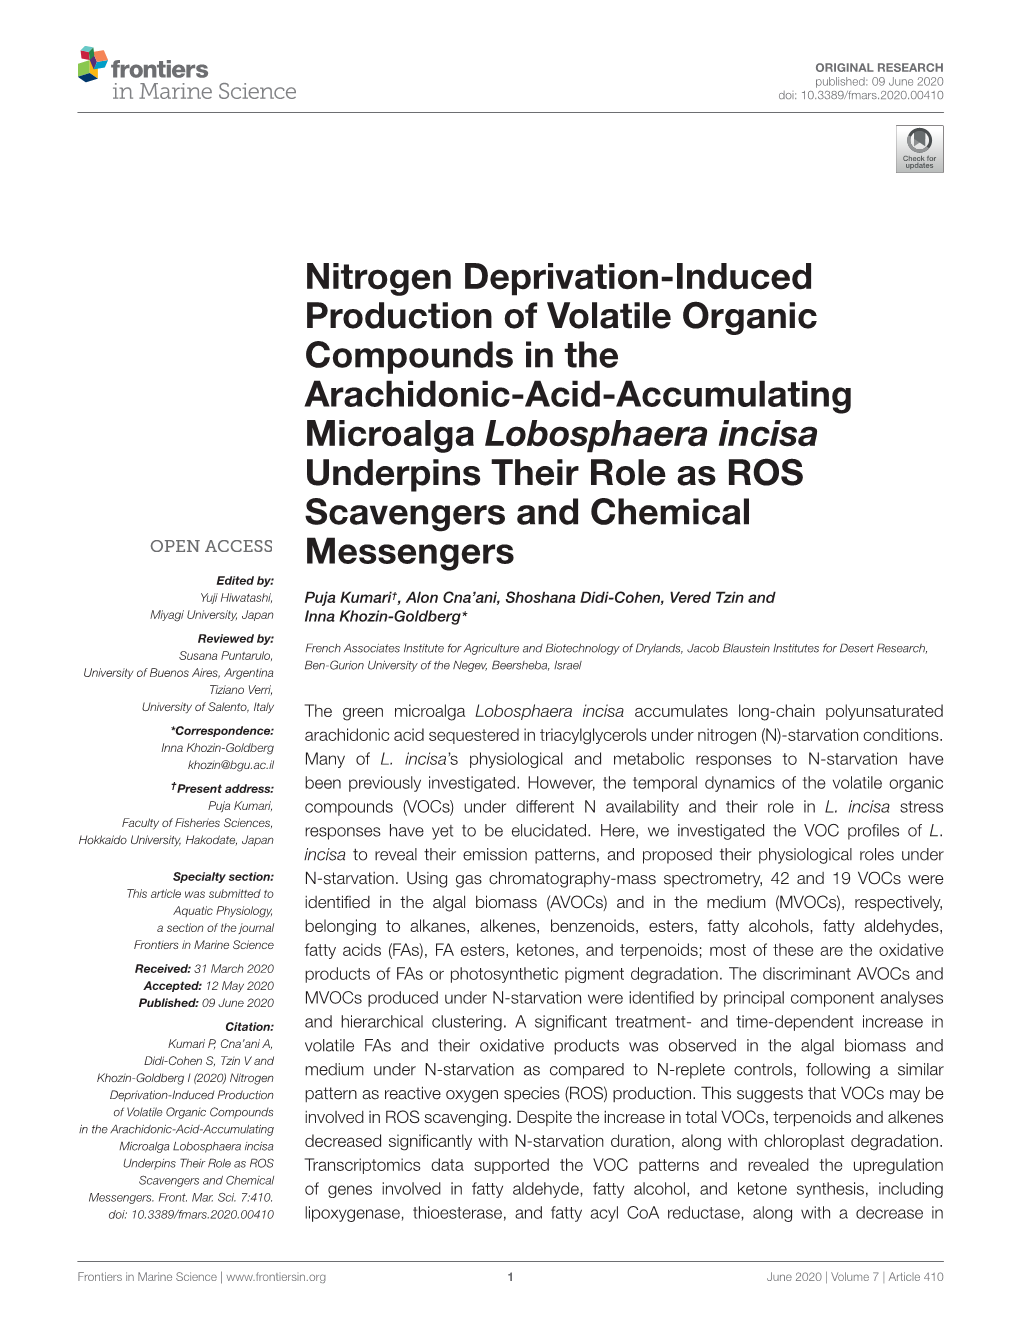 Nitrogen Deprivation-Induced Production of Volatile Organic